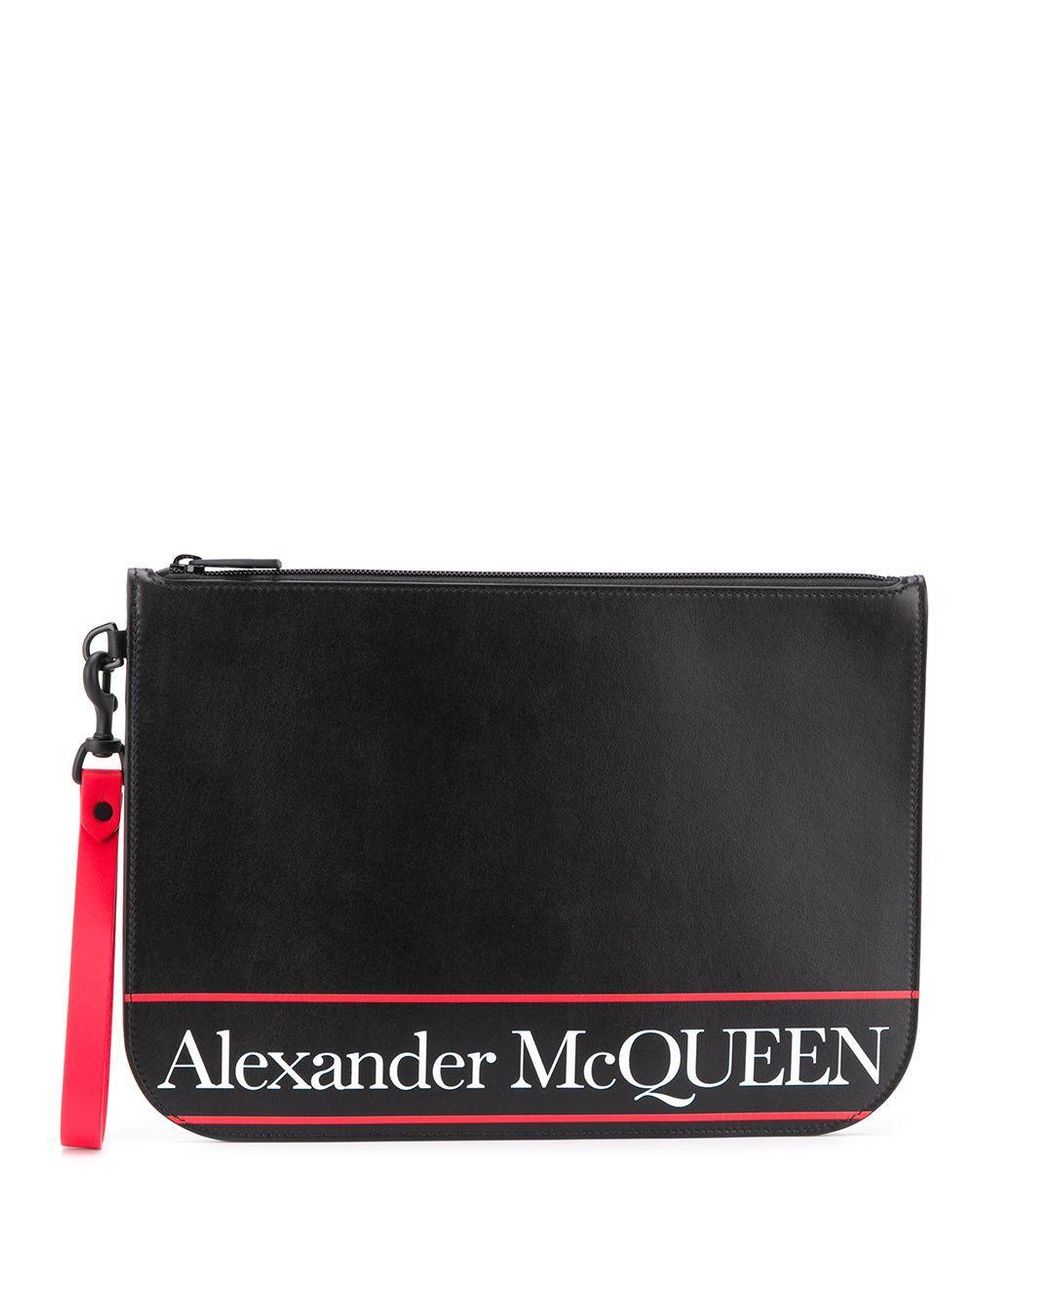 Alexander McQueen Leather Pouch in Black for Men - Lyst